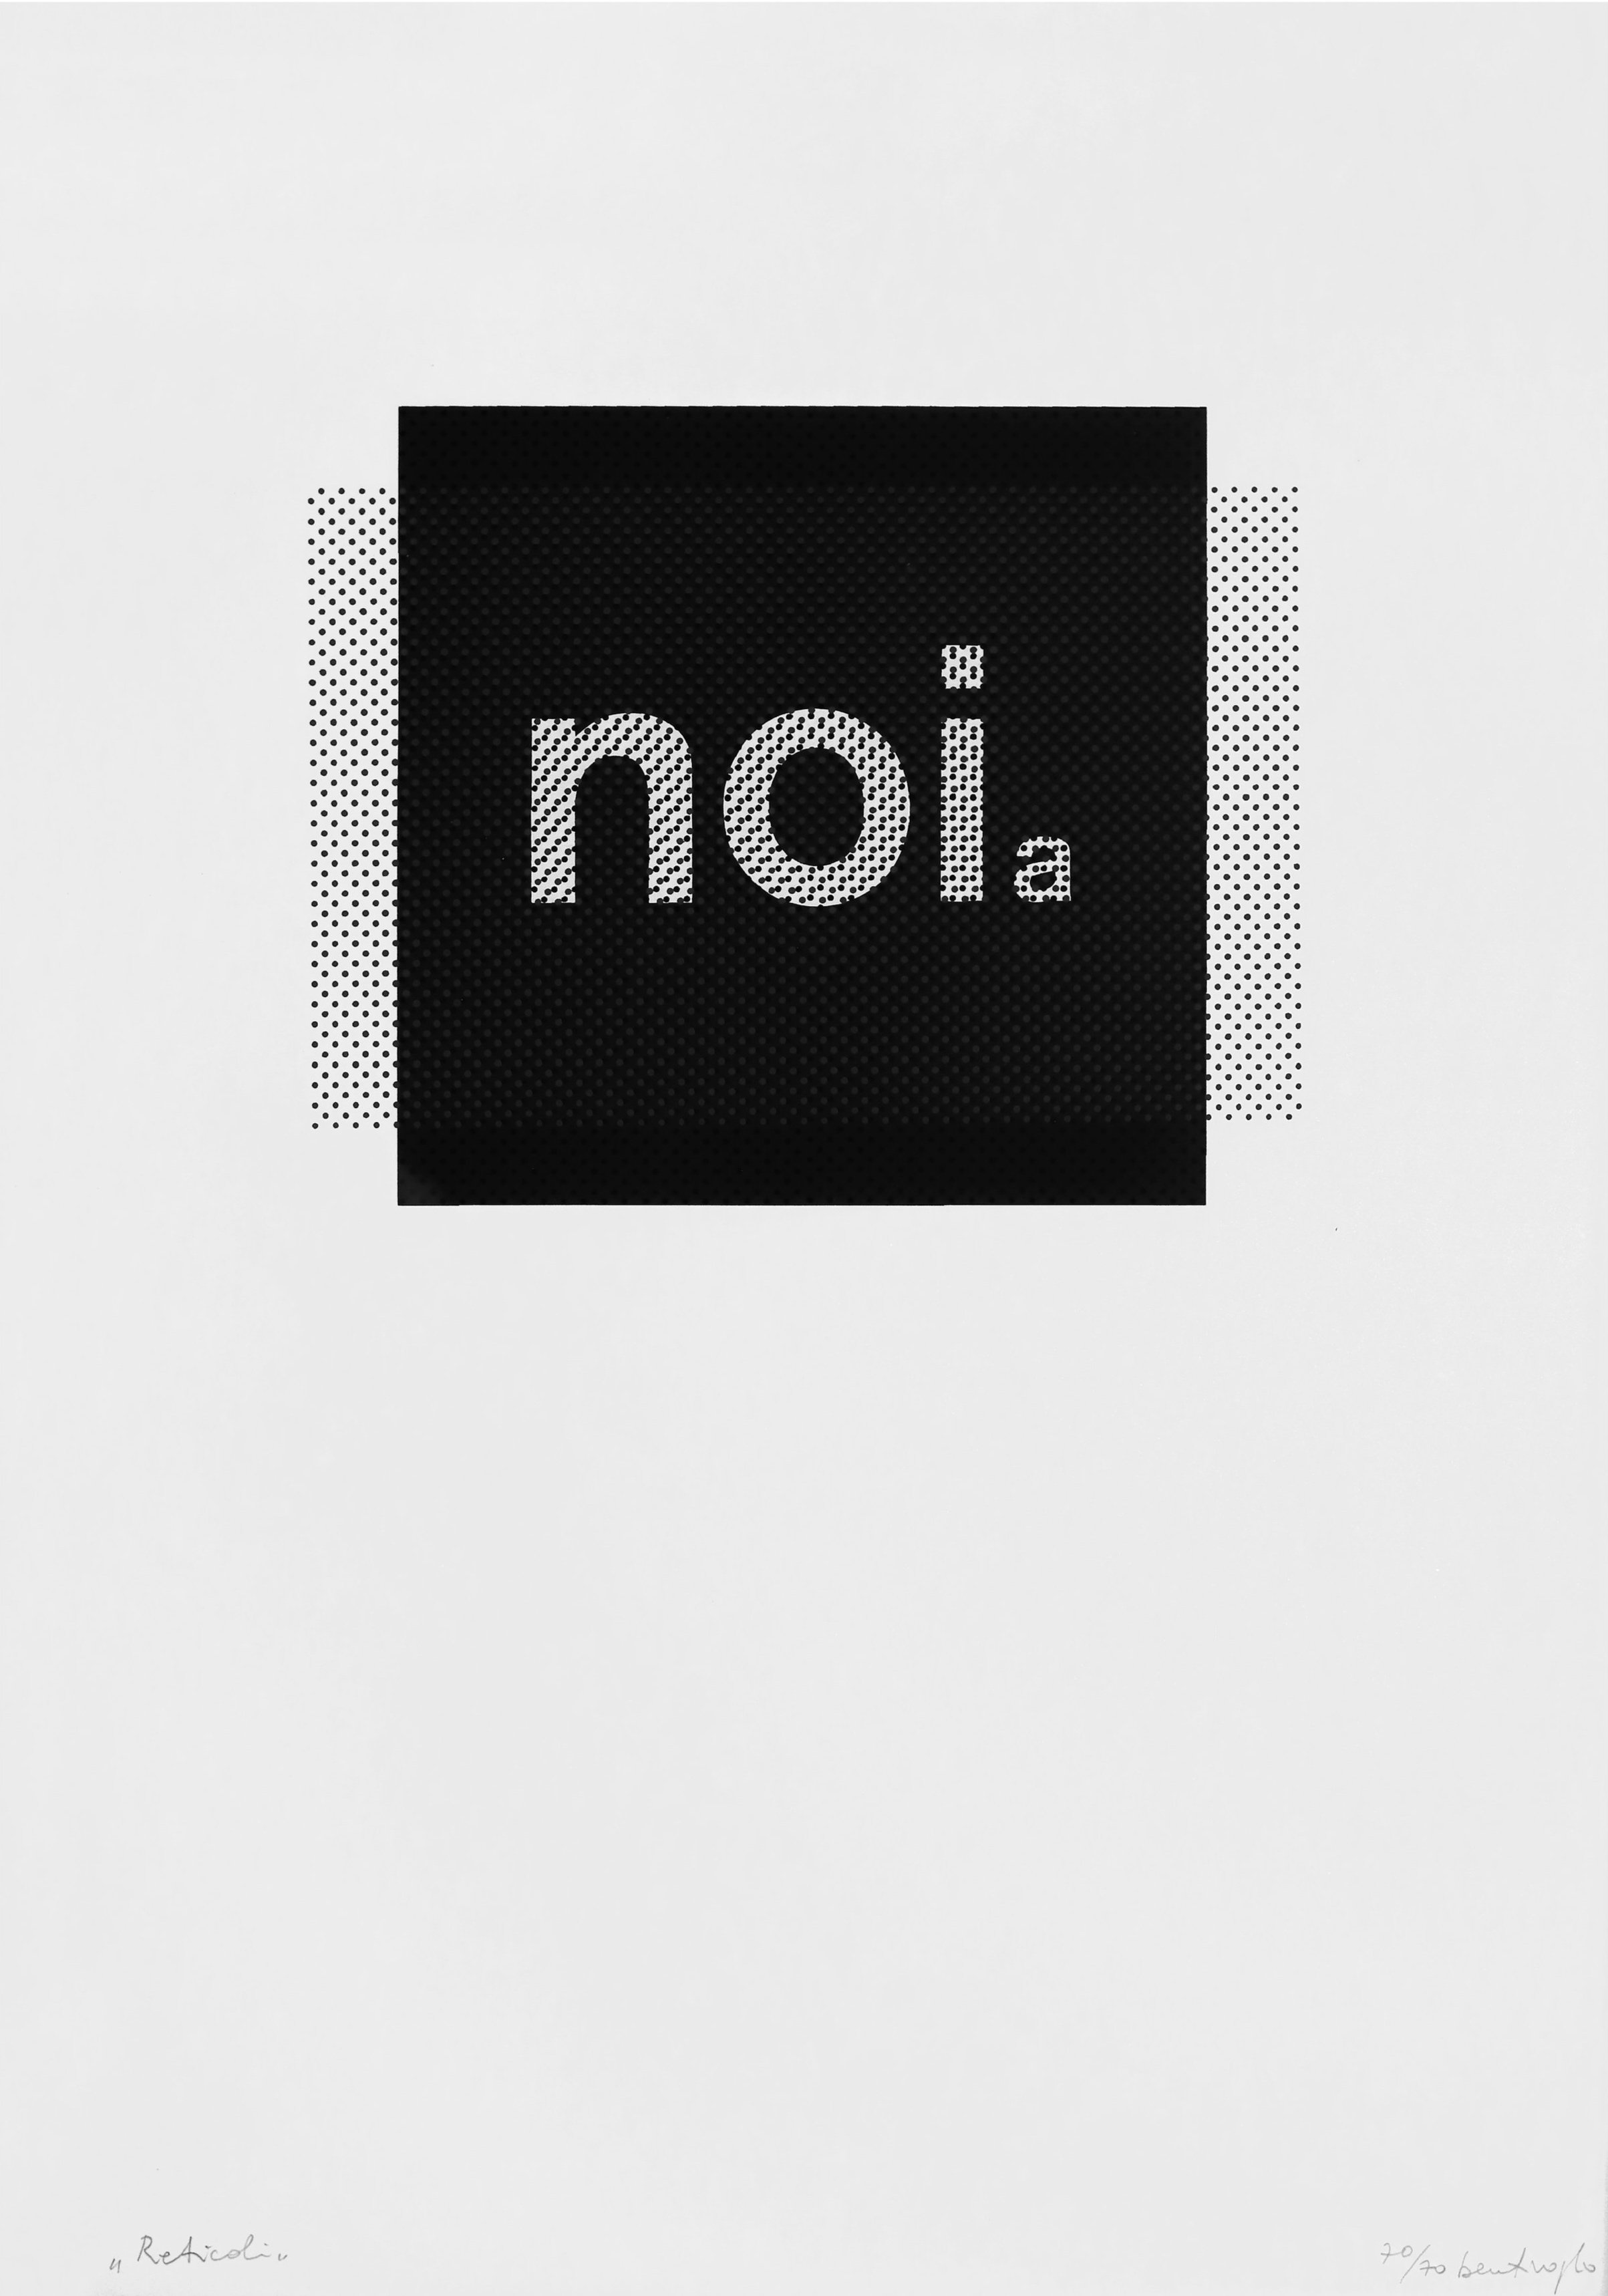 Grids (Noi=Us; Noia=Boredom), 1974
serigraph on paper